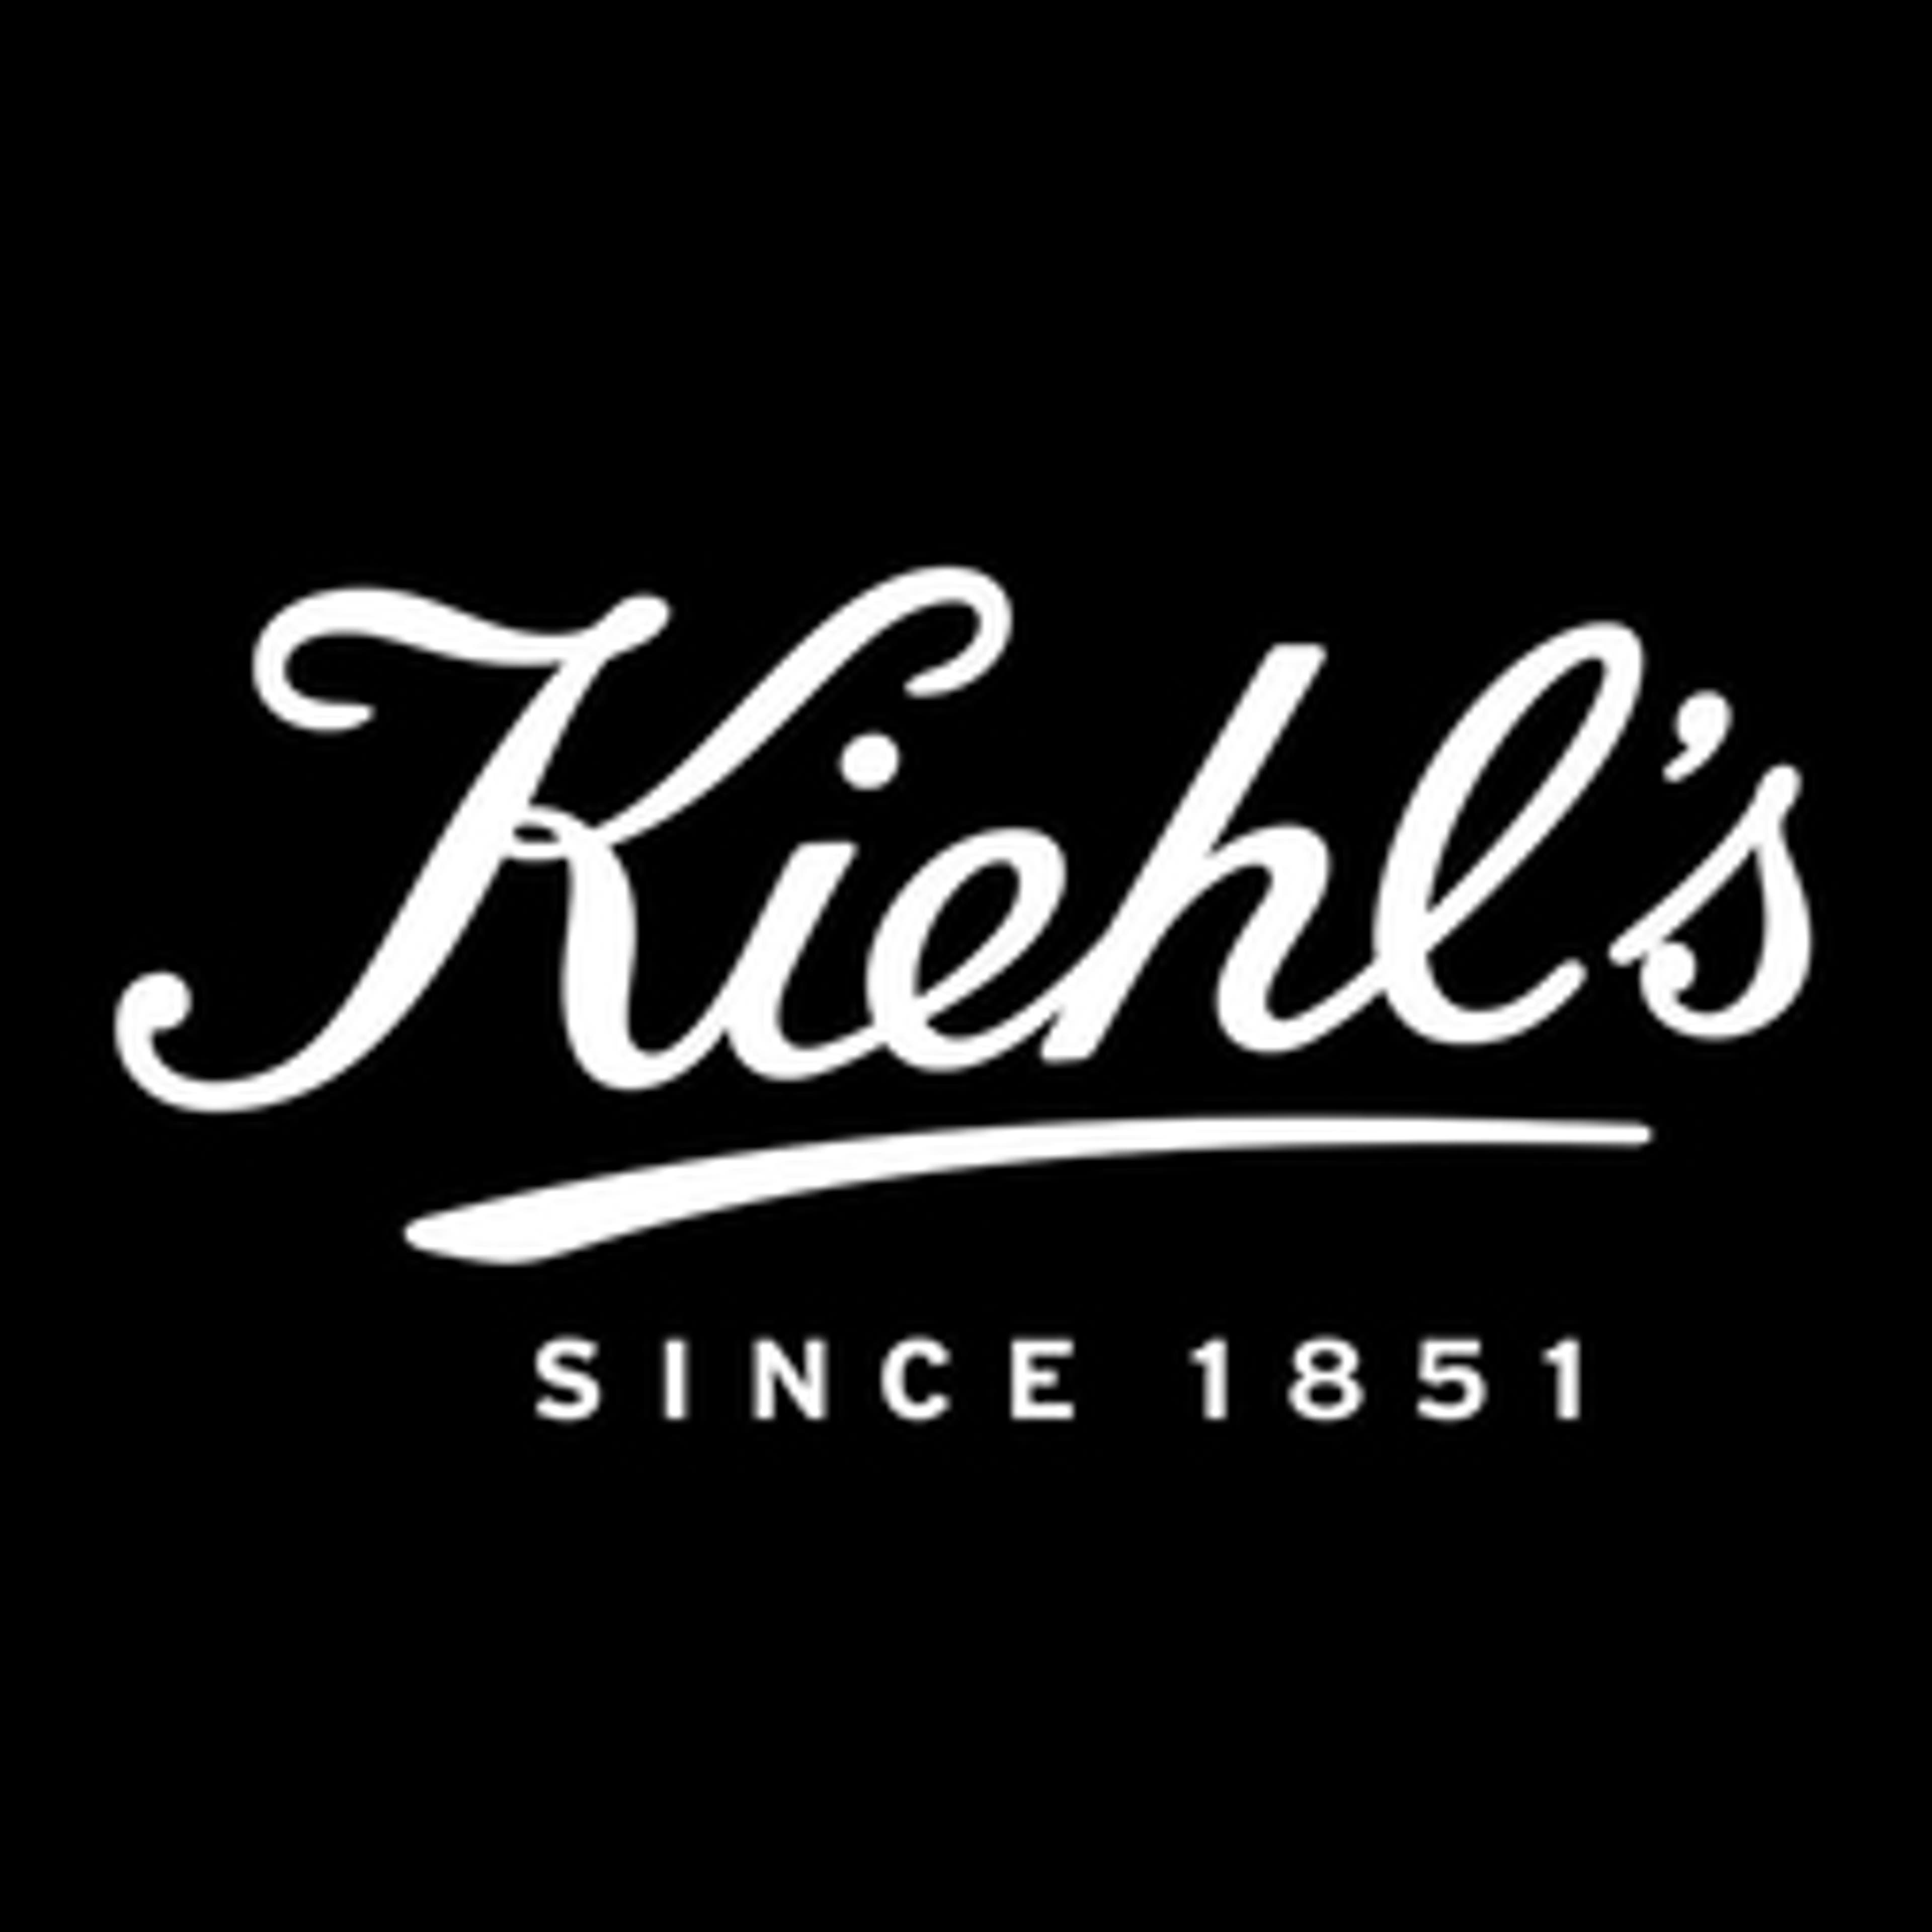  Kiehl's 